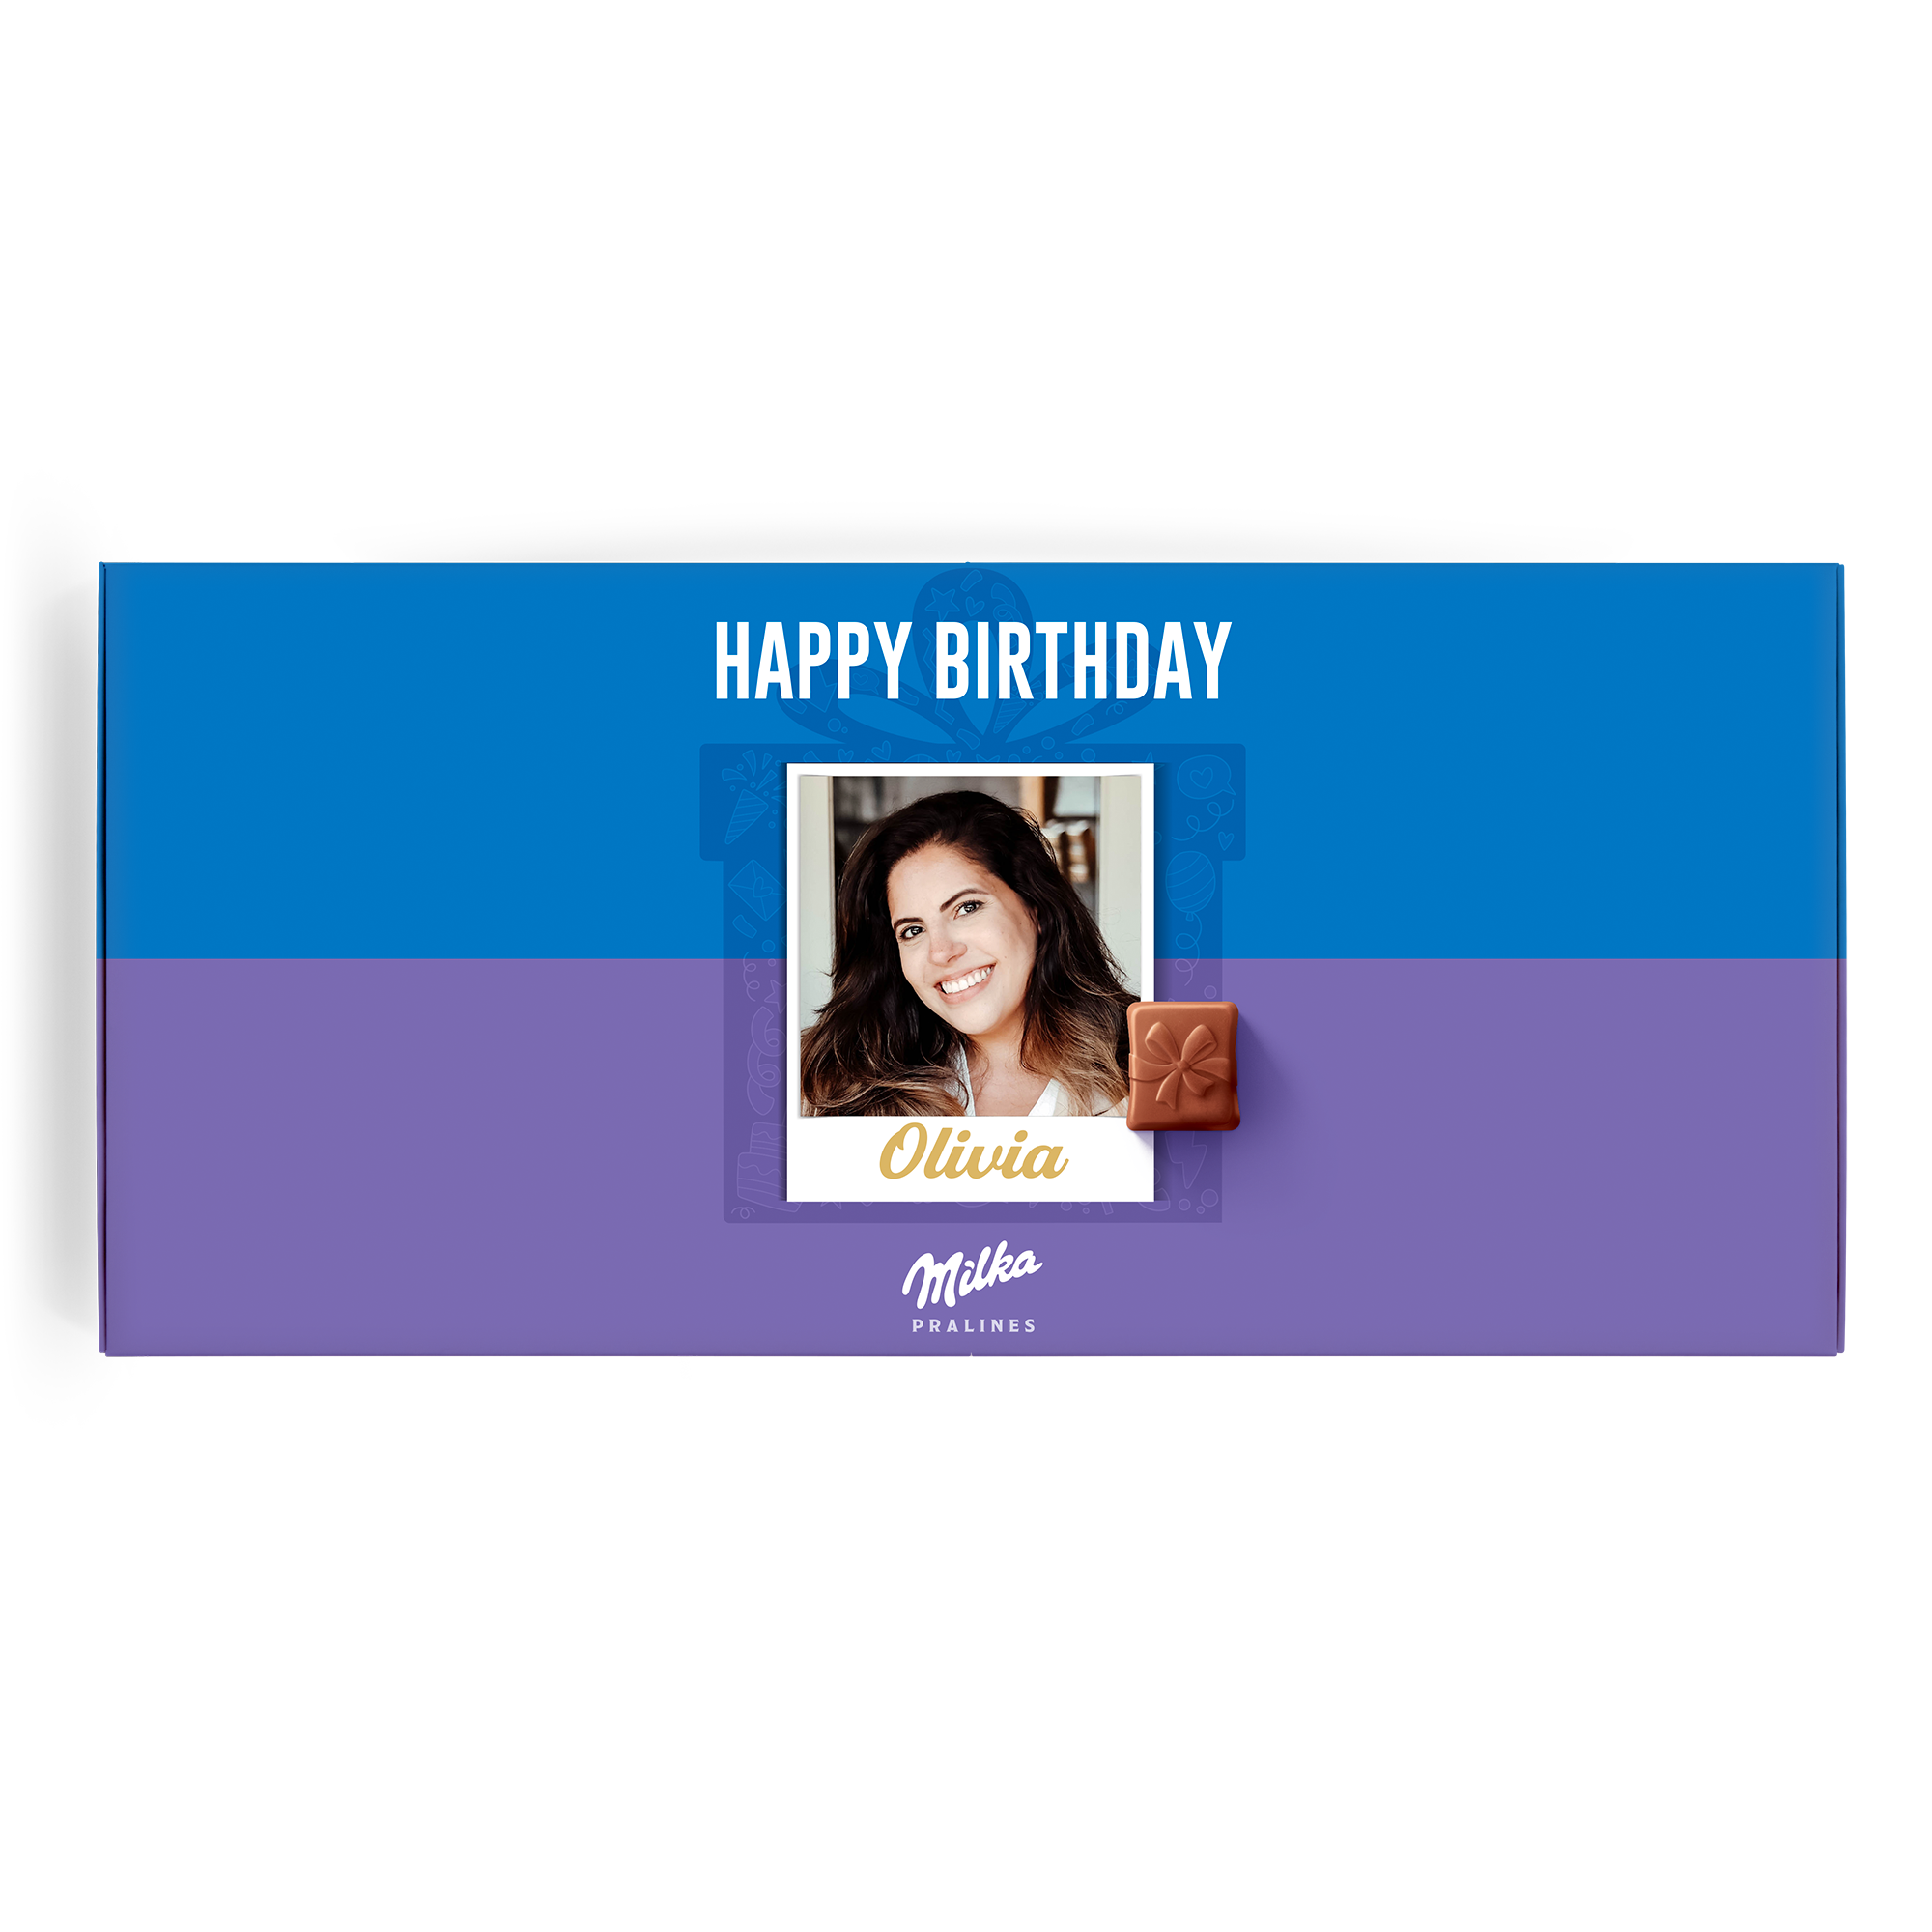 Milka Pralines - Birthday  - Gifts - 220 grams